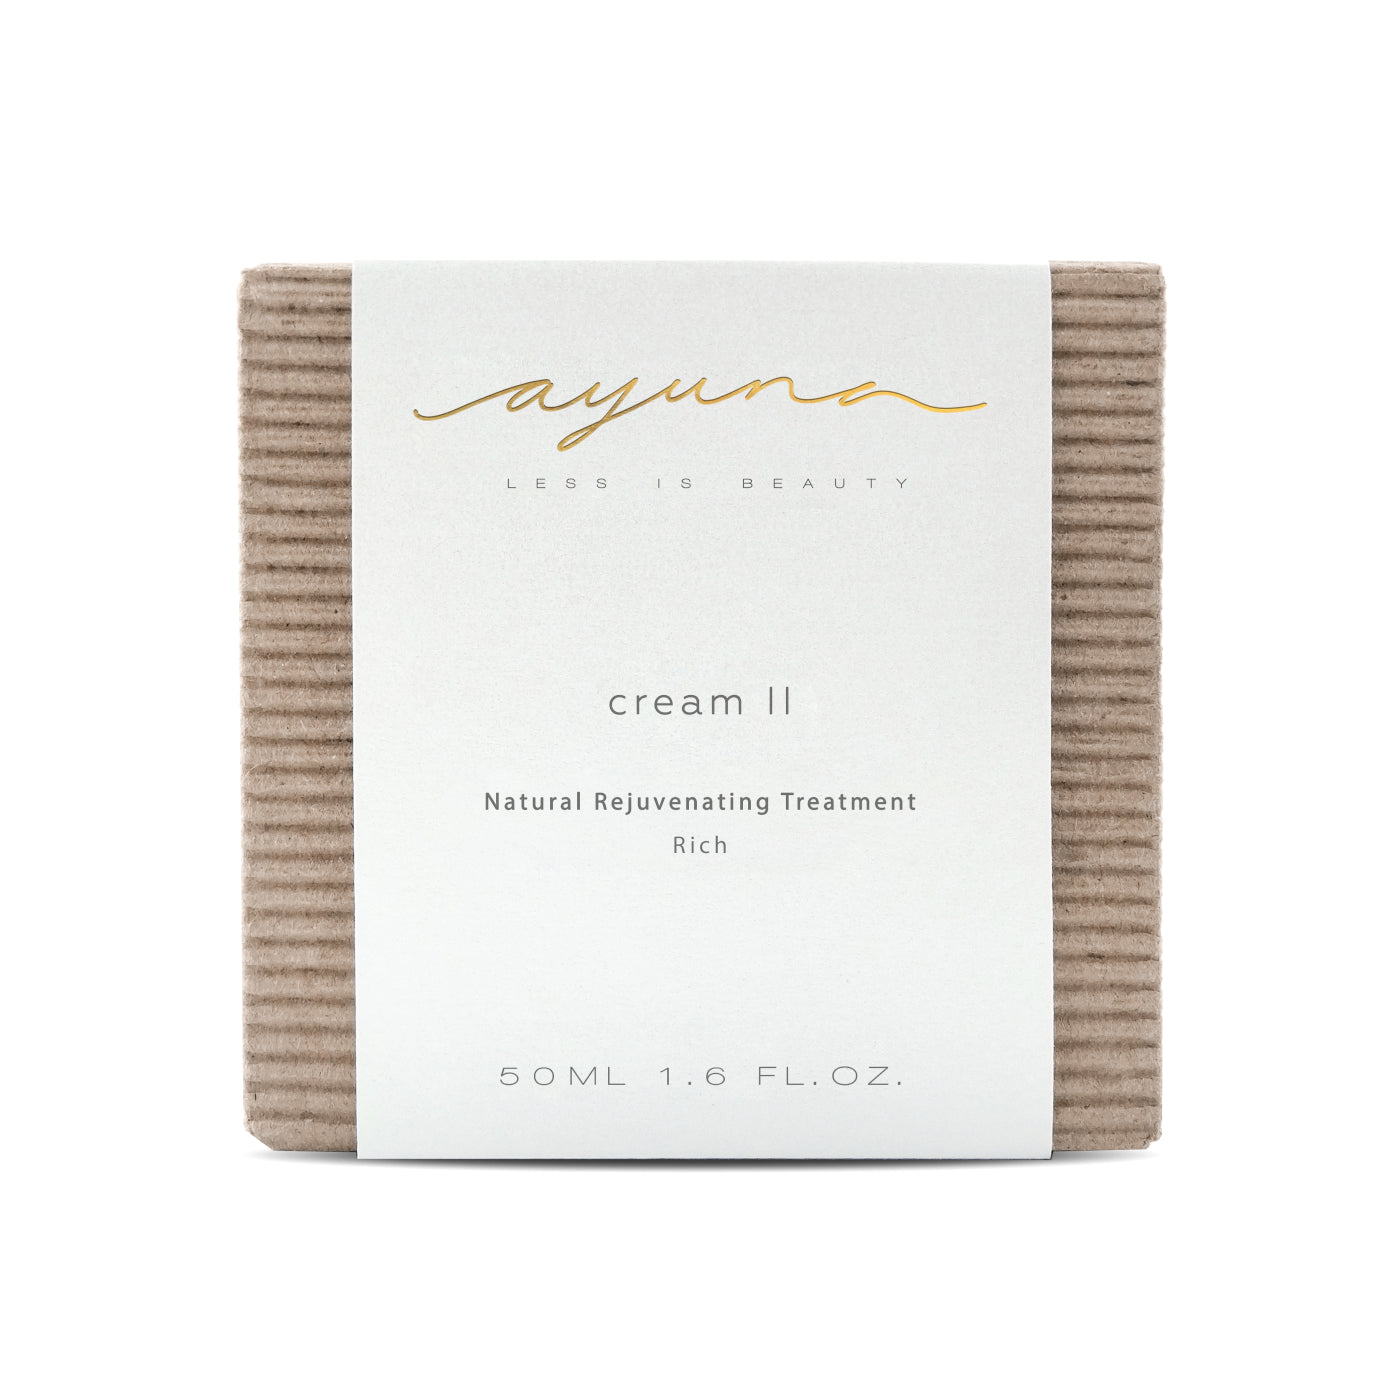 Ayuna cream II Natural rejuvenating cream rich full size